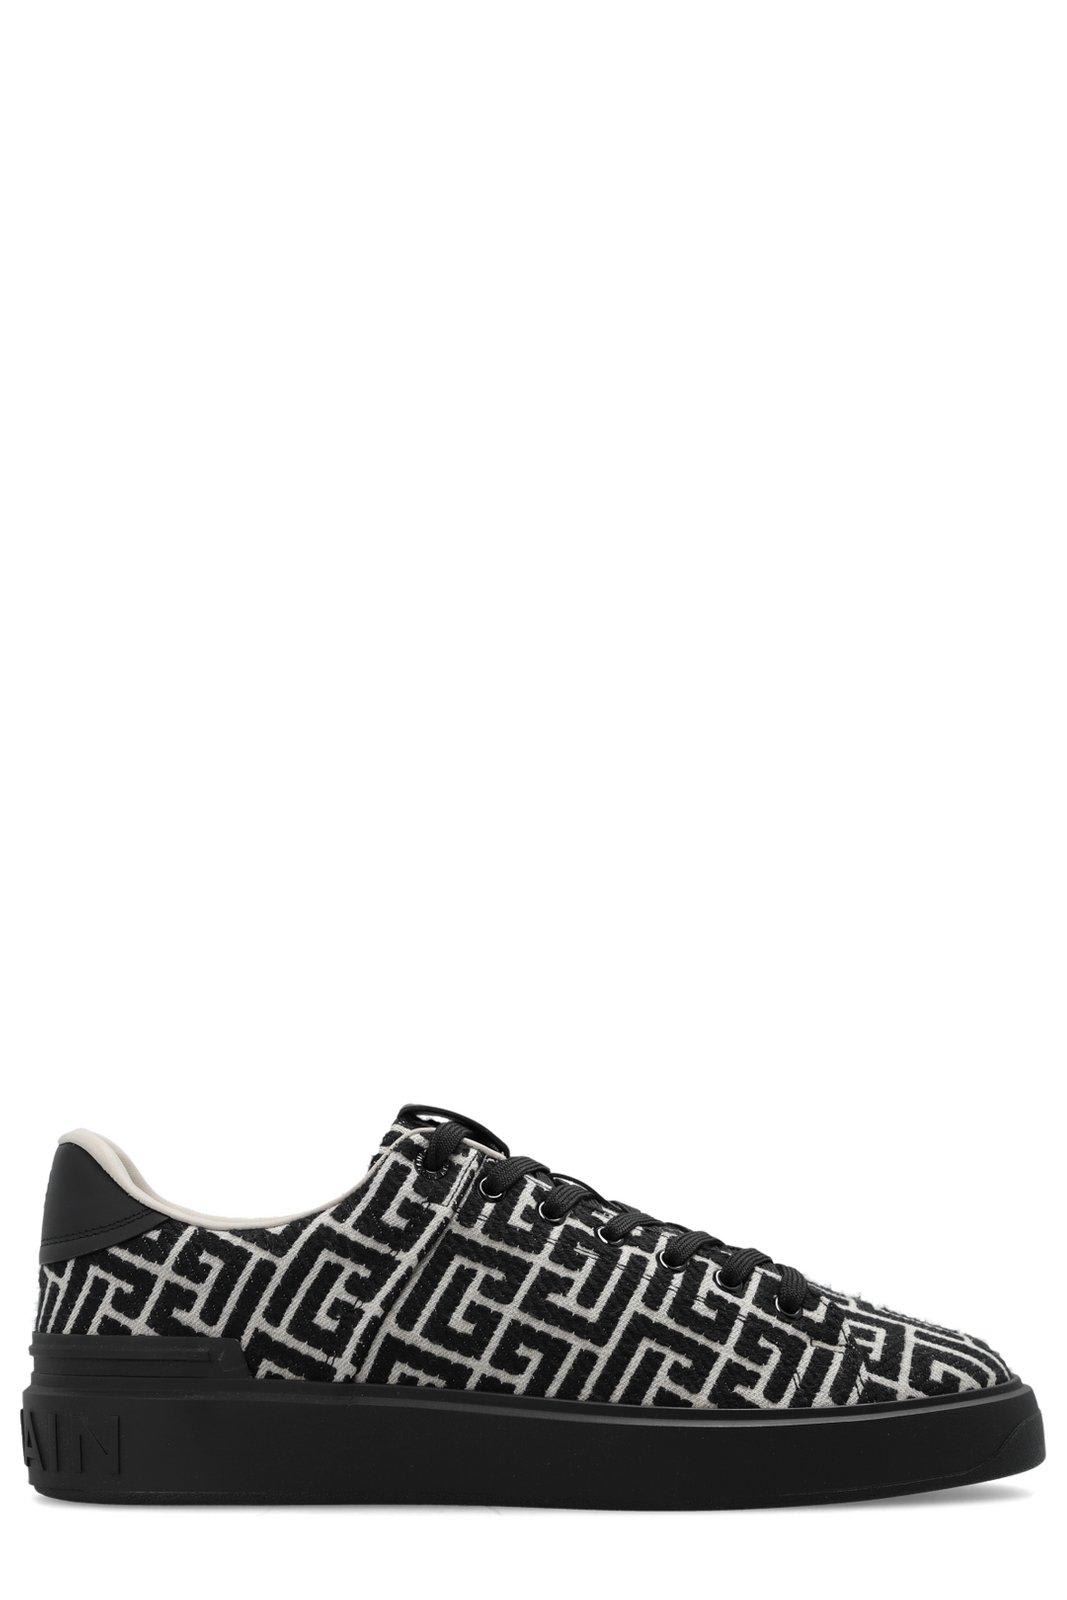 Shop Balmain B Court Monogram Sneakers In Black/white